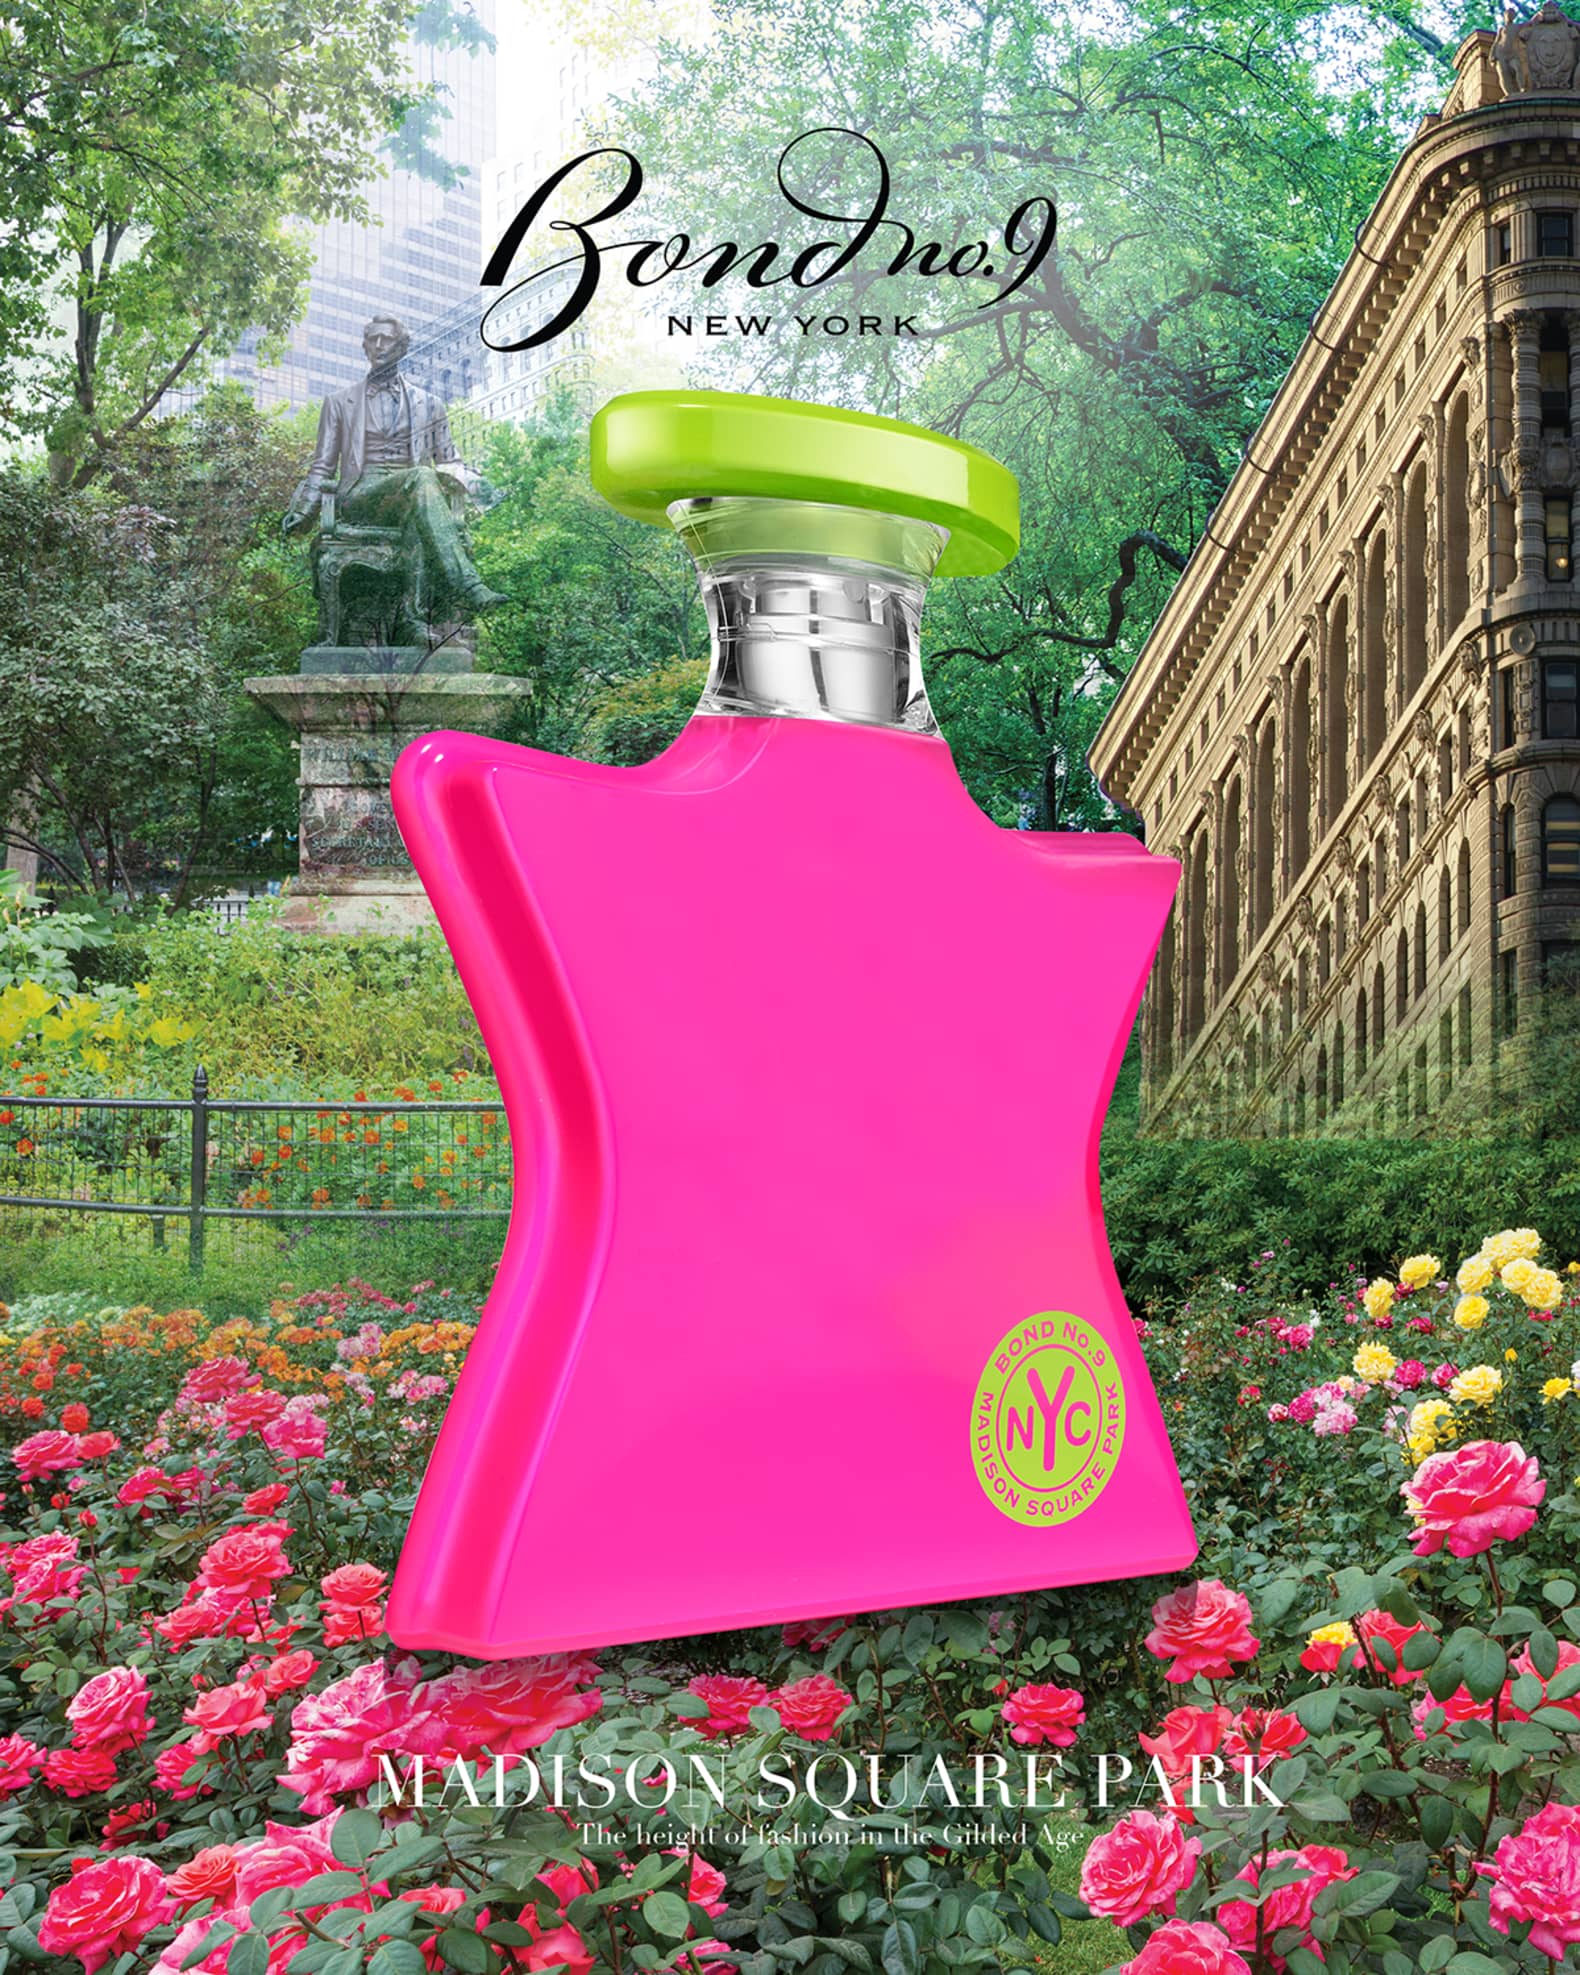 Bond No.9 New York Madison Square Park Eau de Parfum, 3.4 oz